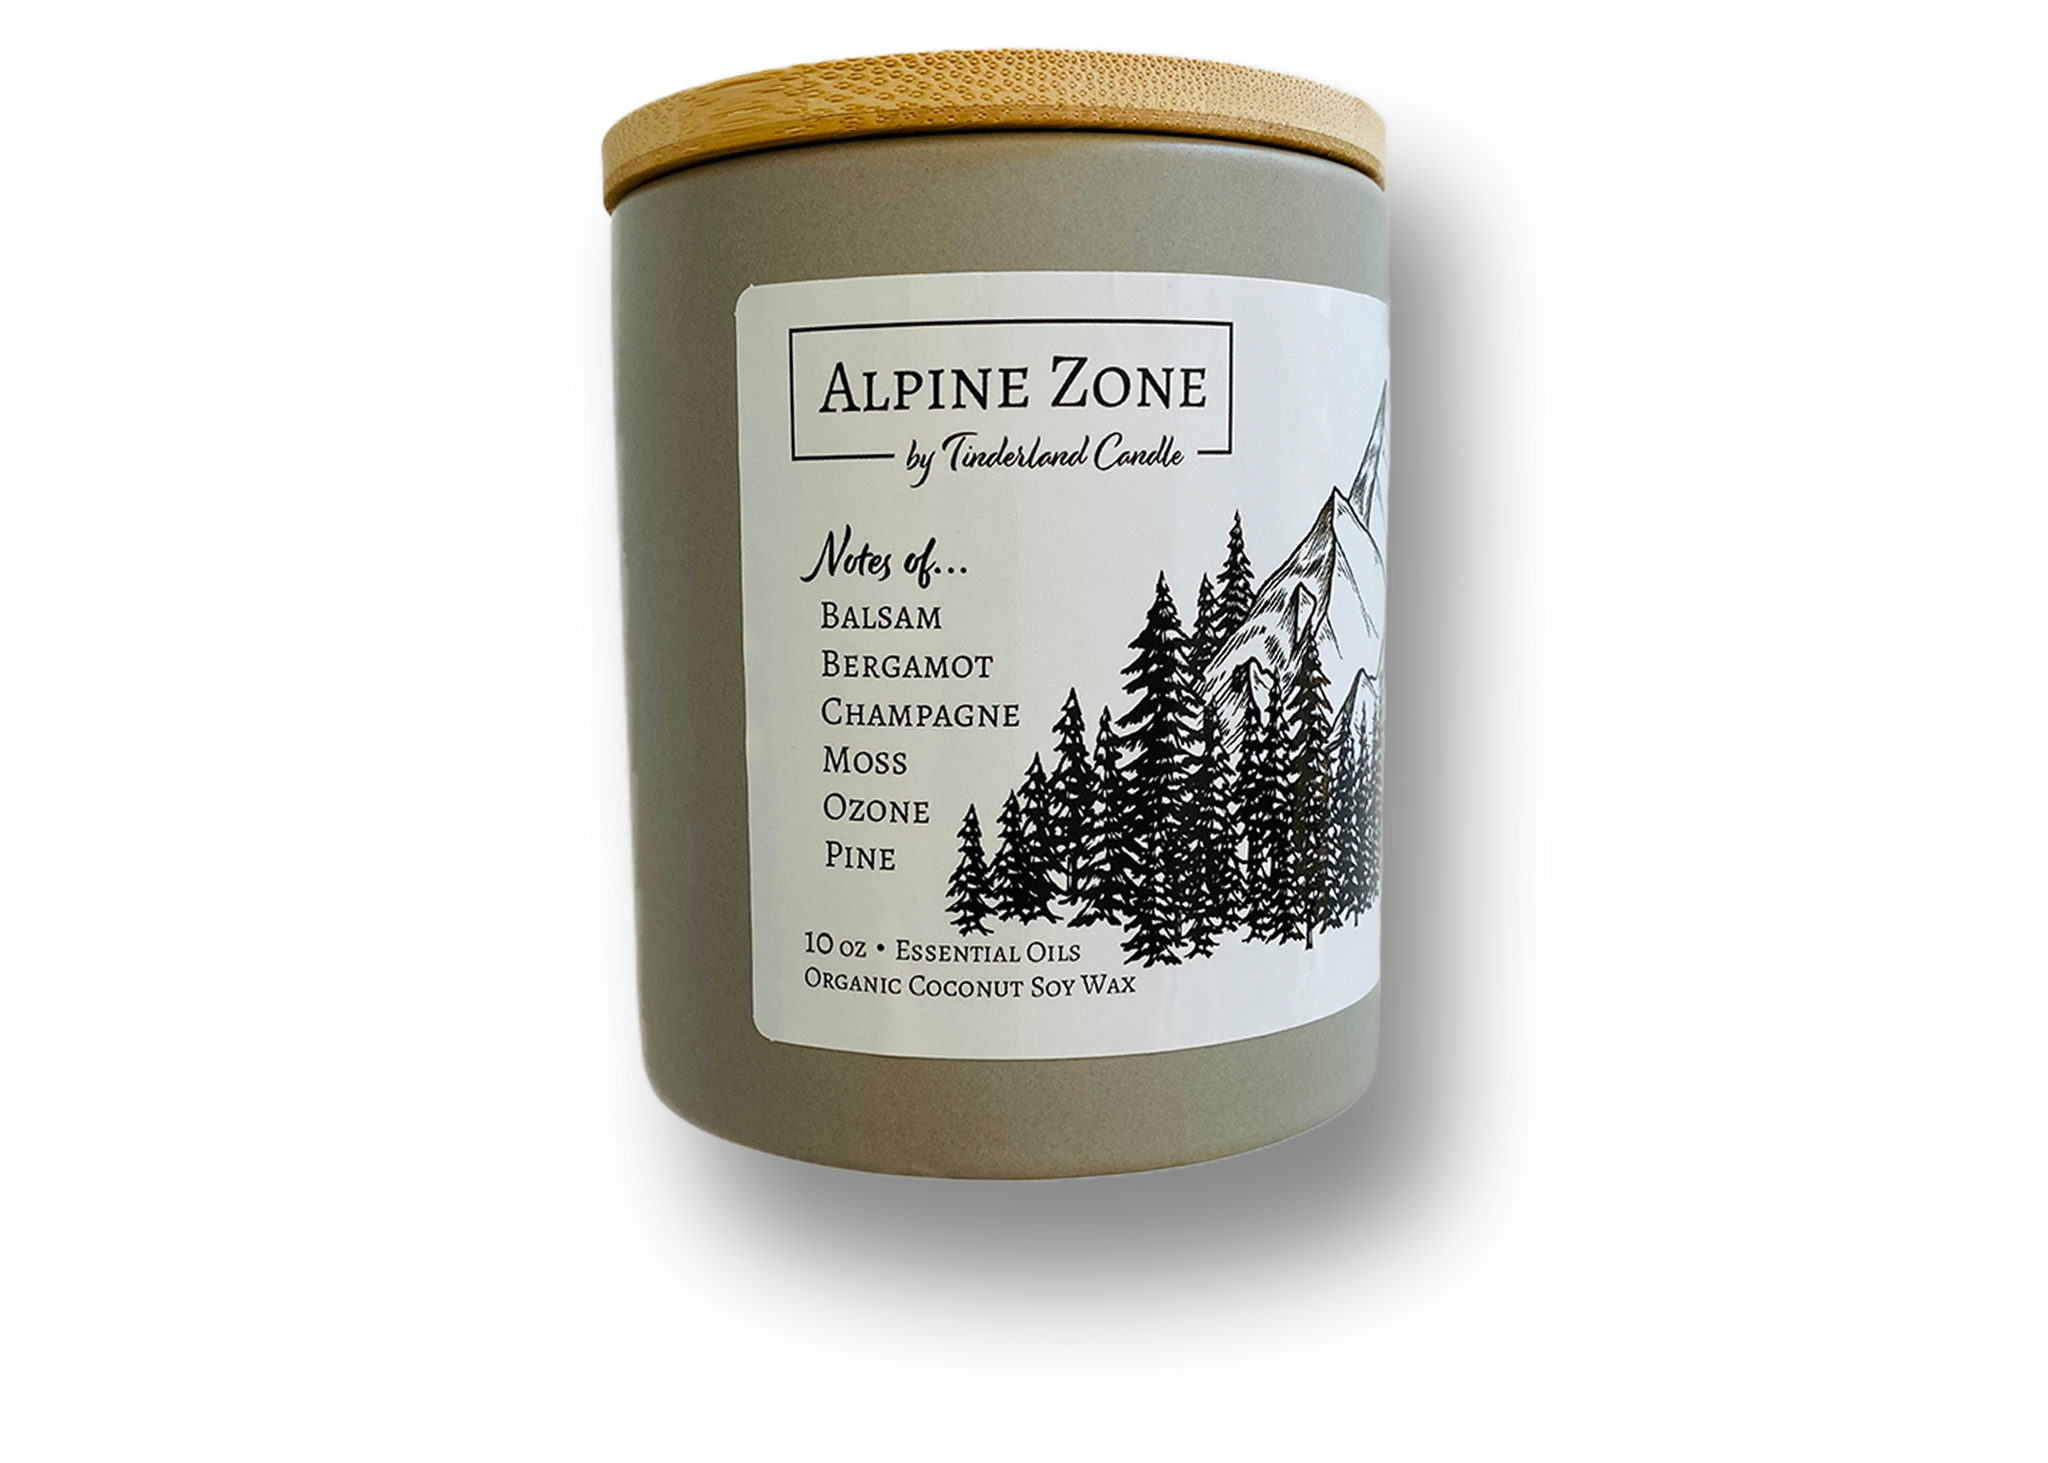 Alpine Zone Candle Tinderland Candle